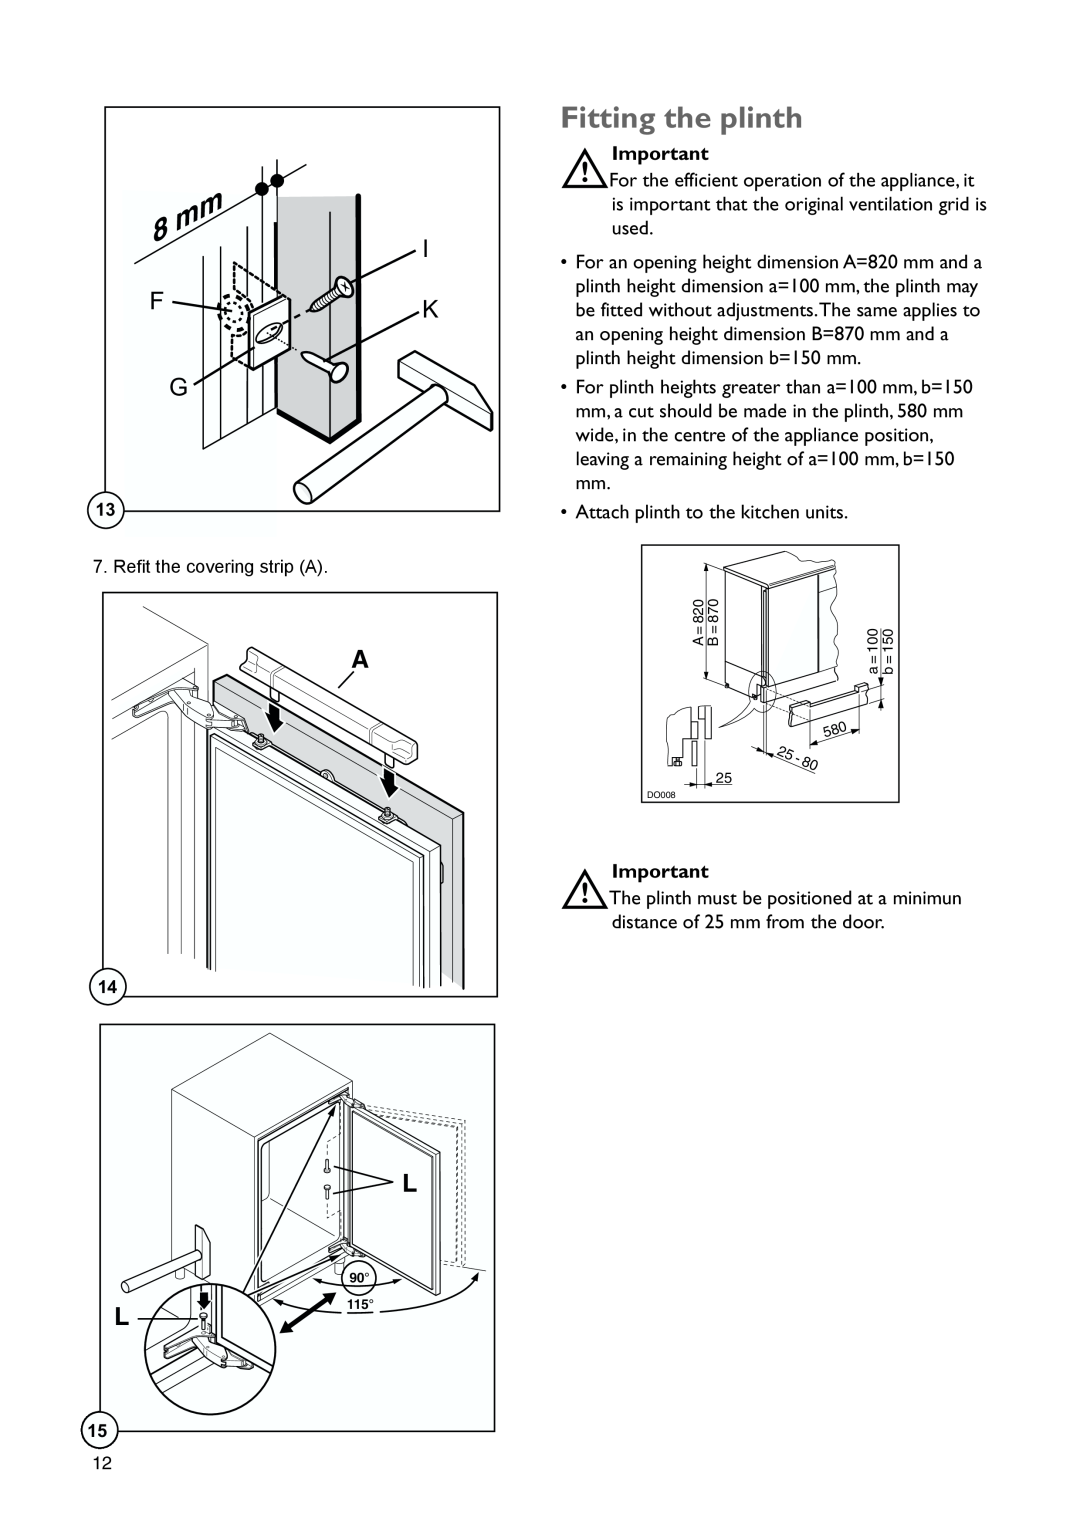 John Lewis JLBIUCF 01 instruction manual Fitting the plinth 